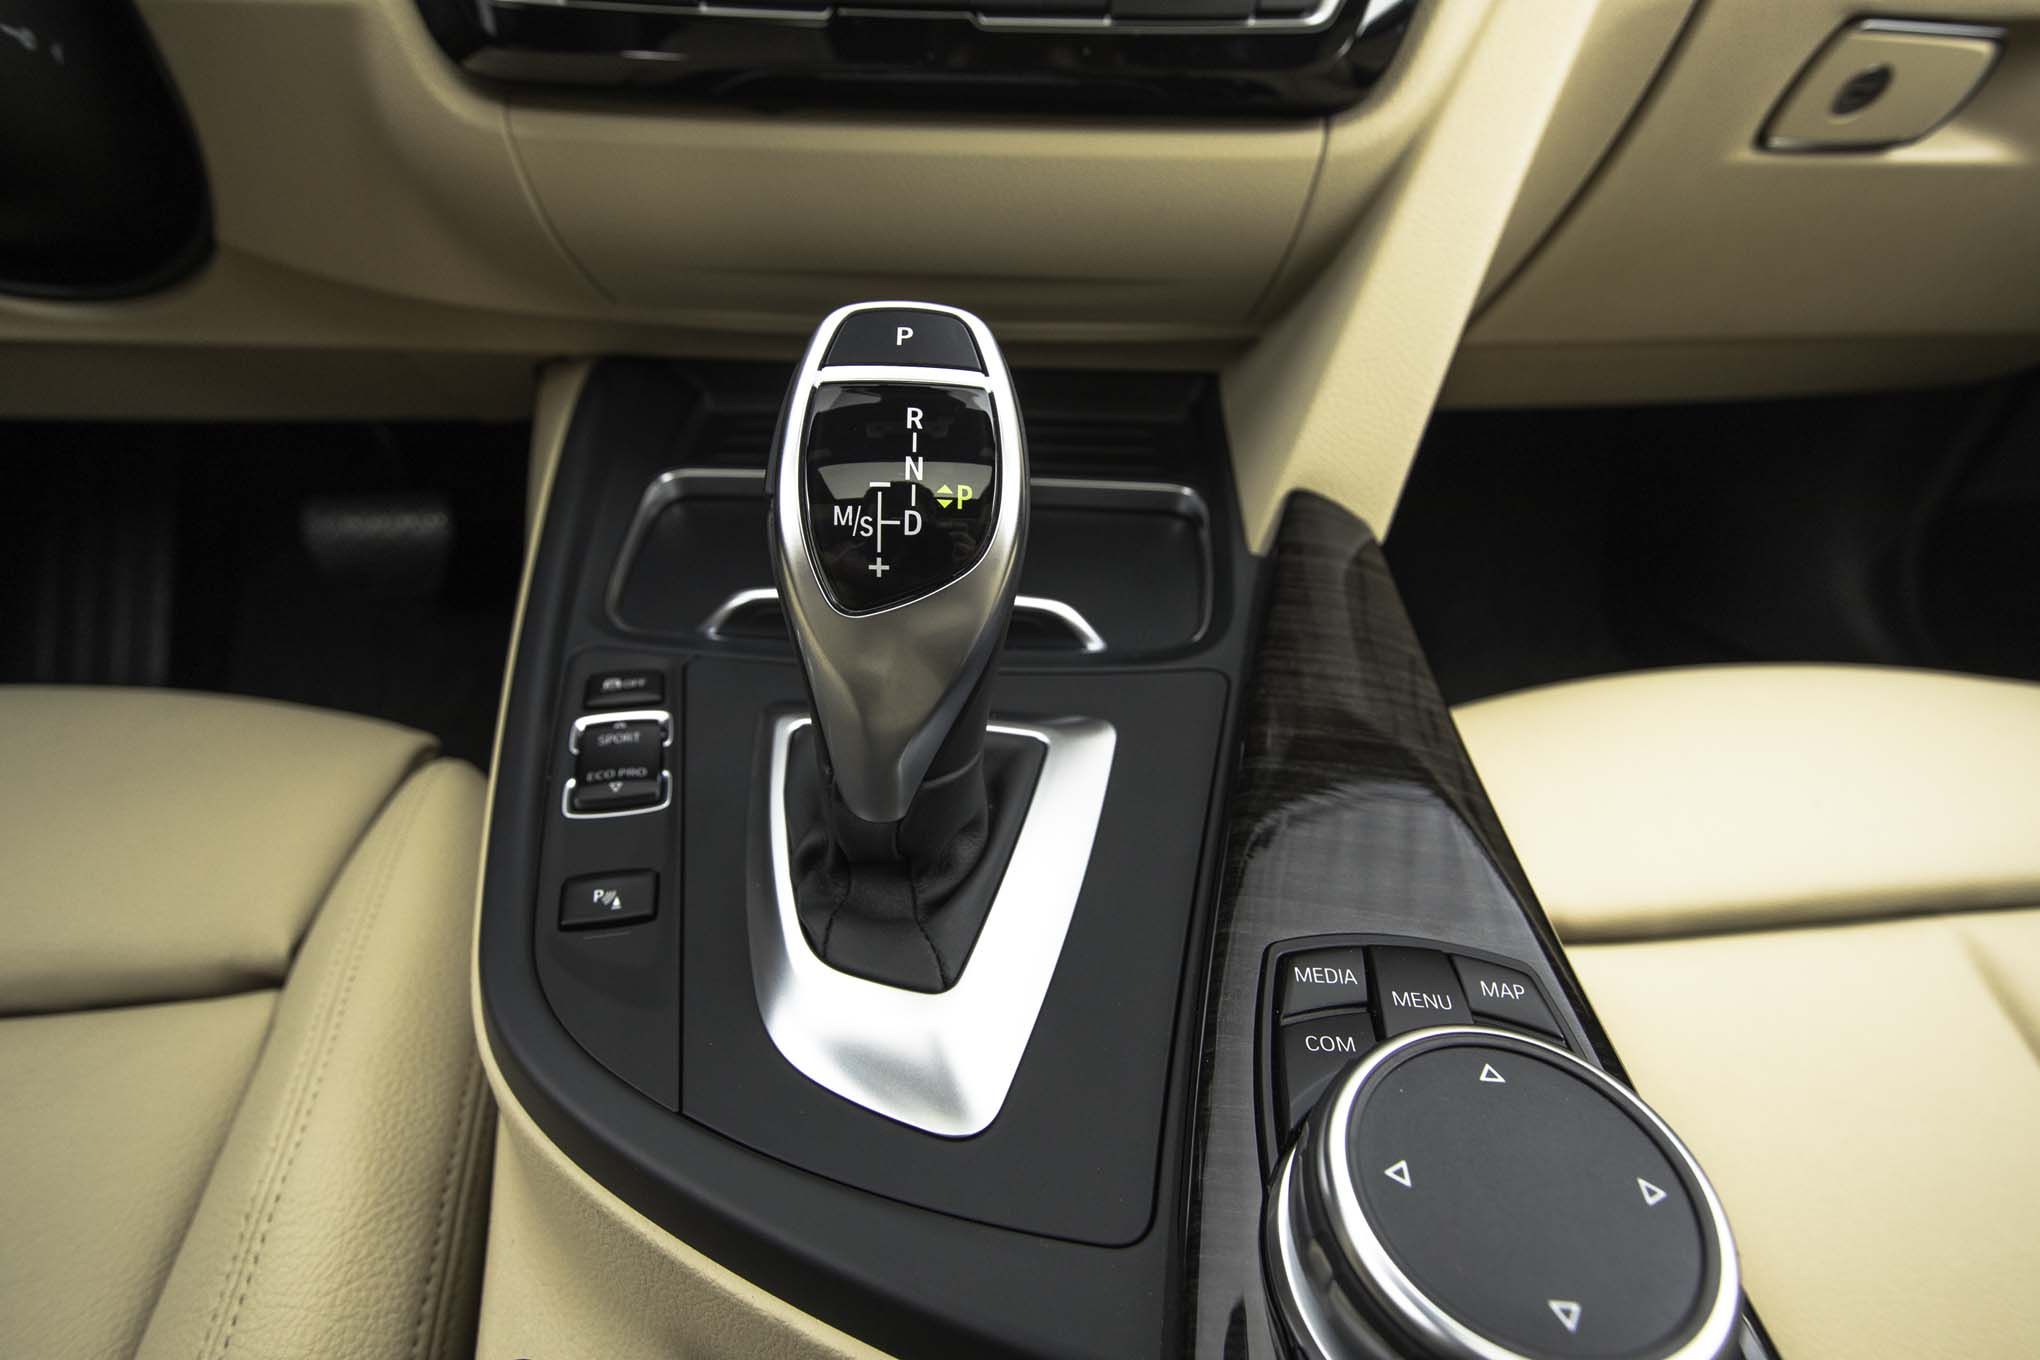 2017 BMW 330i Sedan Interior View Gear Shift Knob (View 53 of 59)